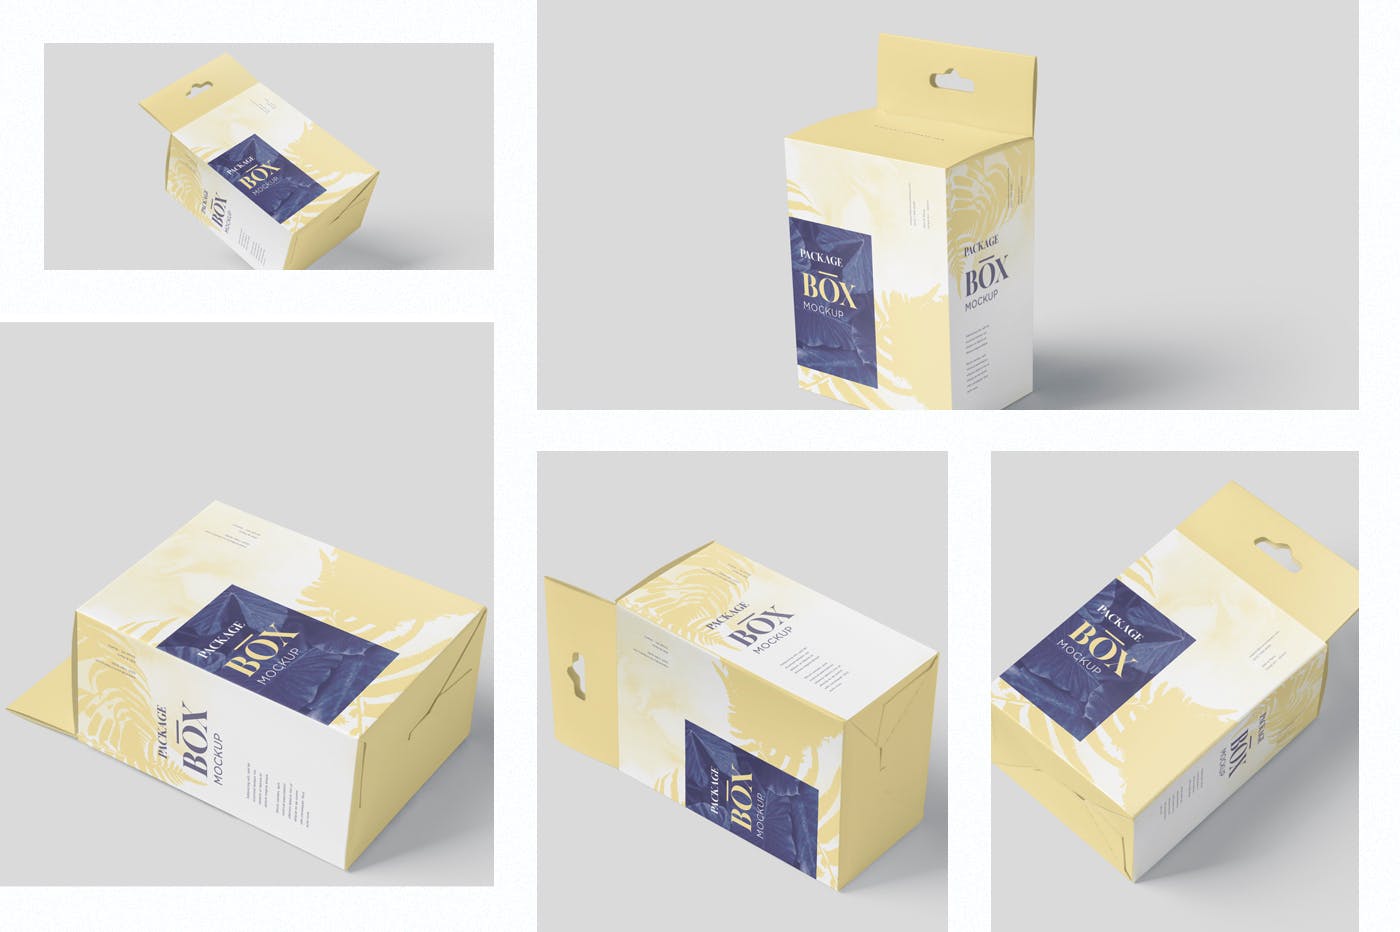 挂耳式扁平矩形包装盒第一素材精选模板 Package Box Mockup Set – Slim Square with Hanger插图(1)